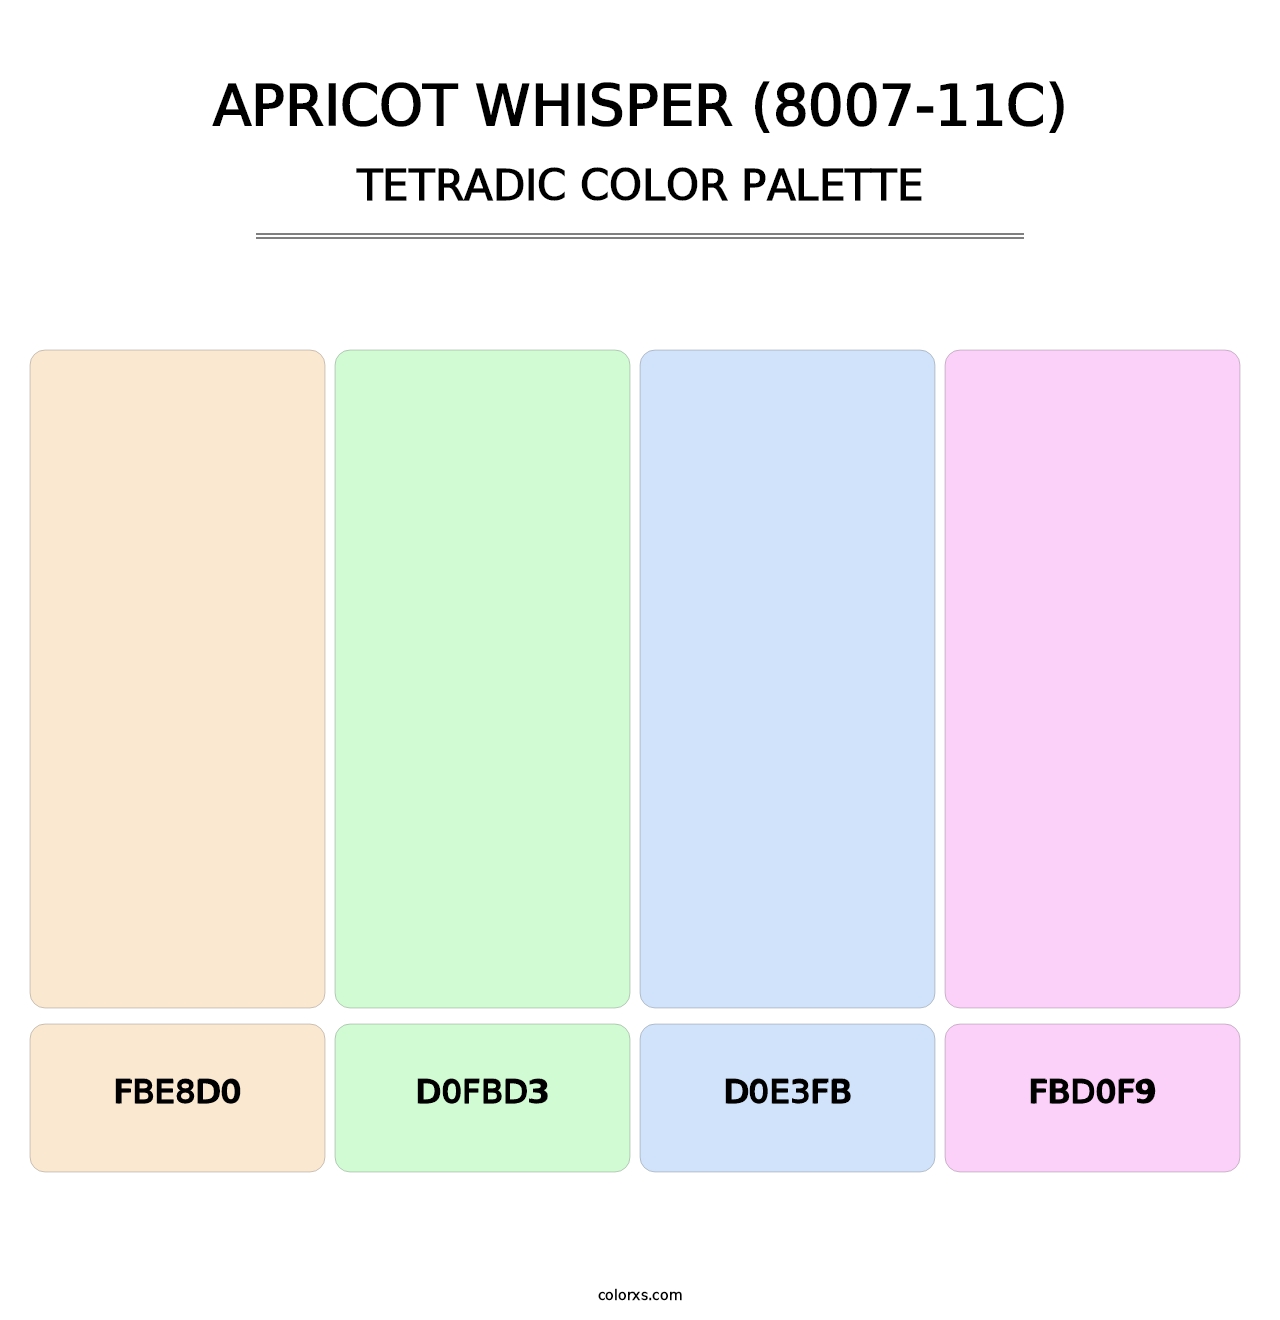 Apricot Whisper (8007-11C) - Tetradic Color Palette